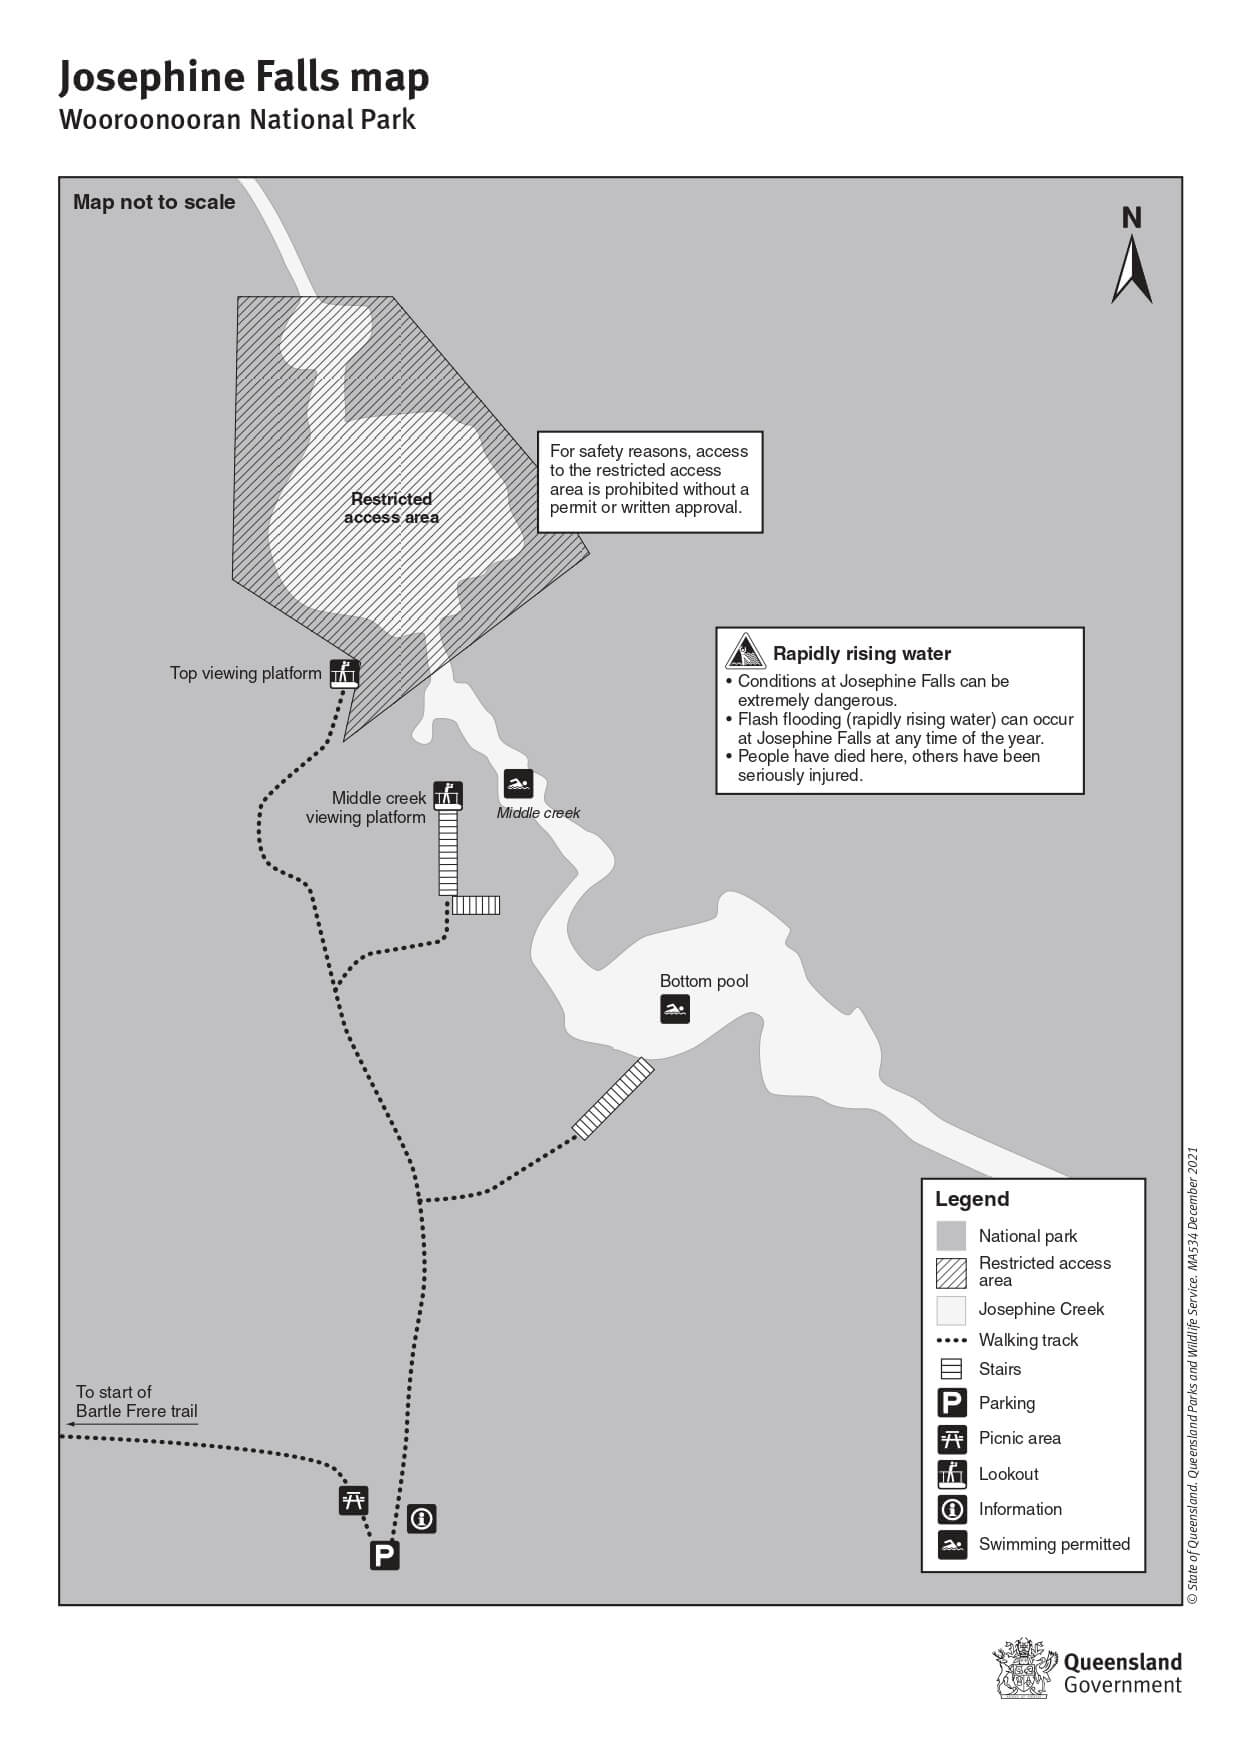 Josephine Falls map, Wooroonooran National Park, Queensland.